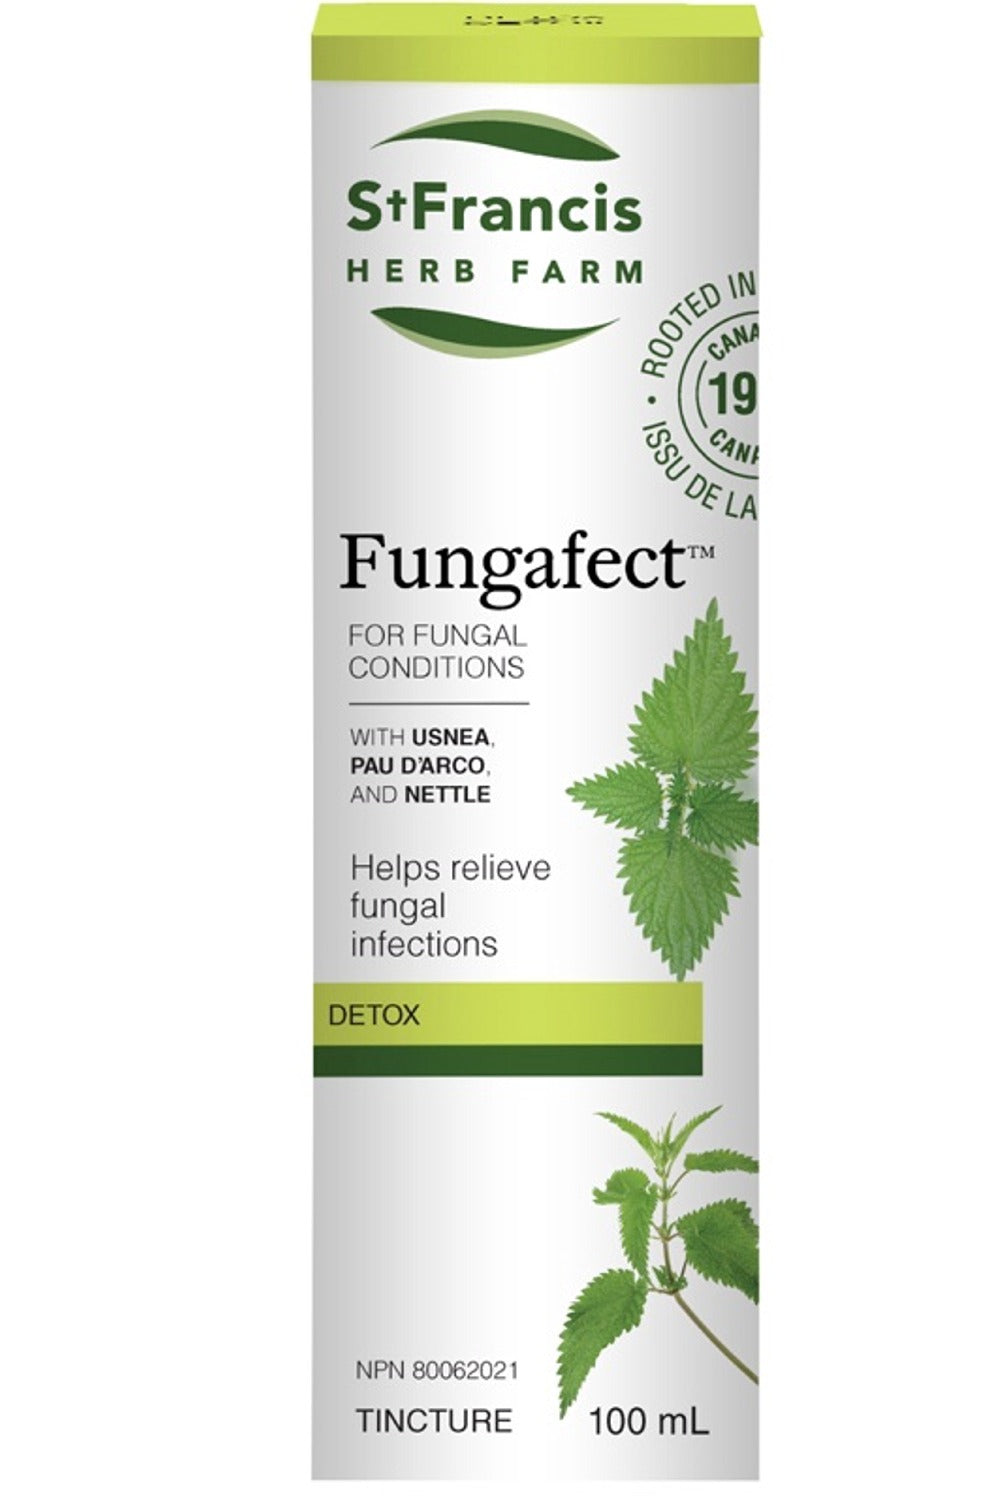 ST FRANCIS HERB FARM Fungafect (100 ml)